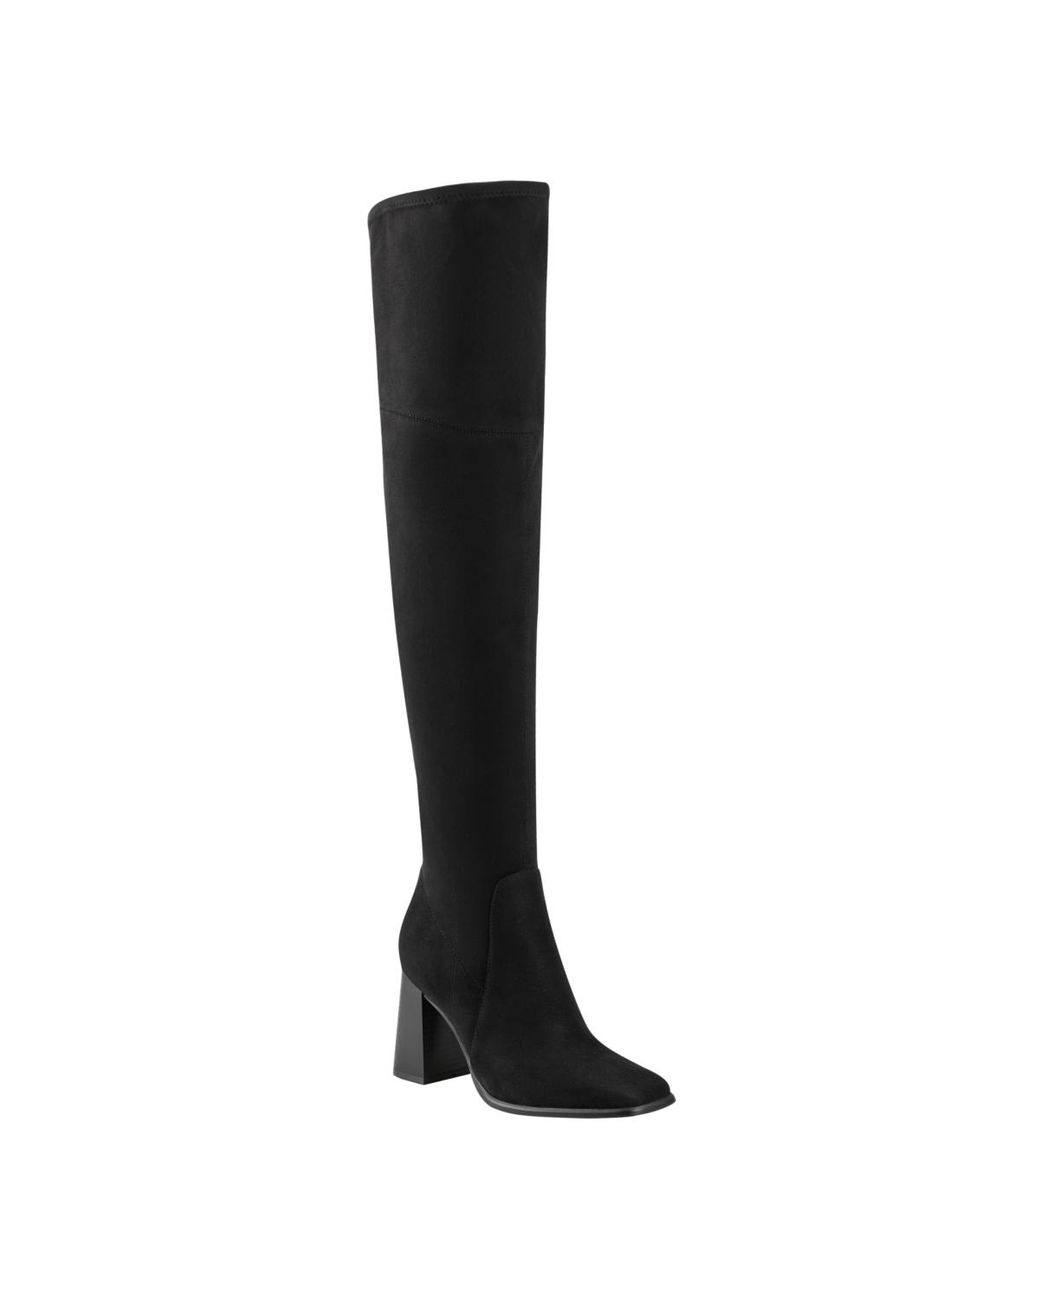 SoleiMani Lucky Leather Narrow Calf Dress Heel Boots – Slim Calf Boots